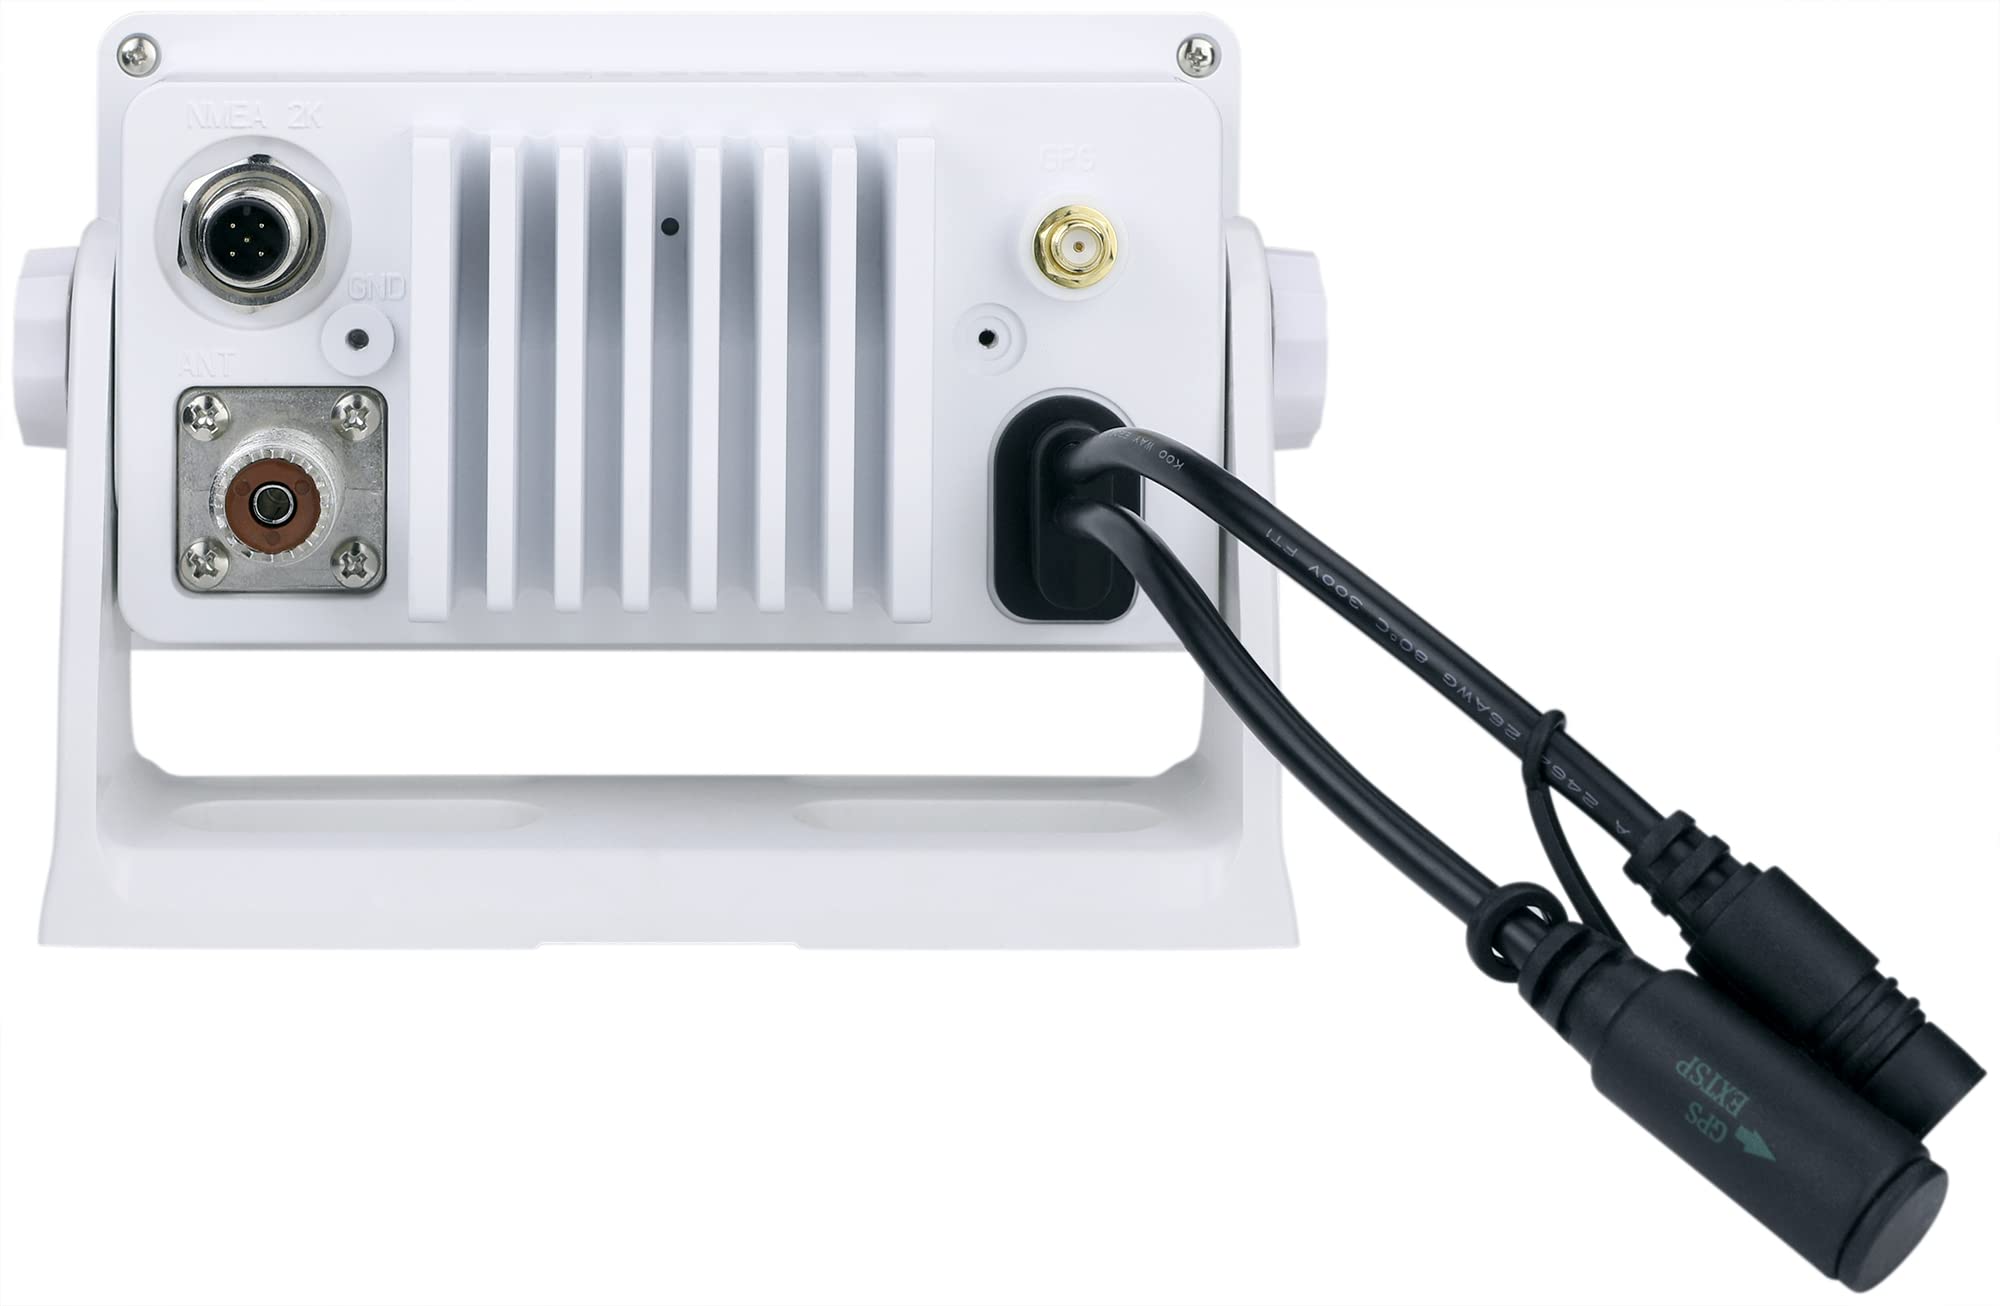 Uniden UM725GBT Marine VHF Radio, All USA, Canada, and Intl. Marine Channels, 1Watt/25Watt Transmit Power, Largest LCD Screen in Class, NOAA Weather Channels, Speaker Mic, GPS Built-in, and Bluetooth